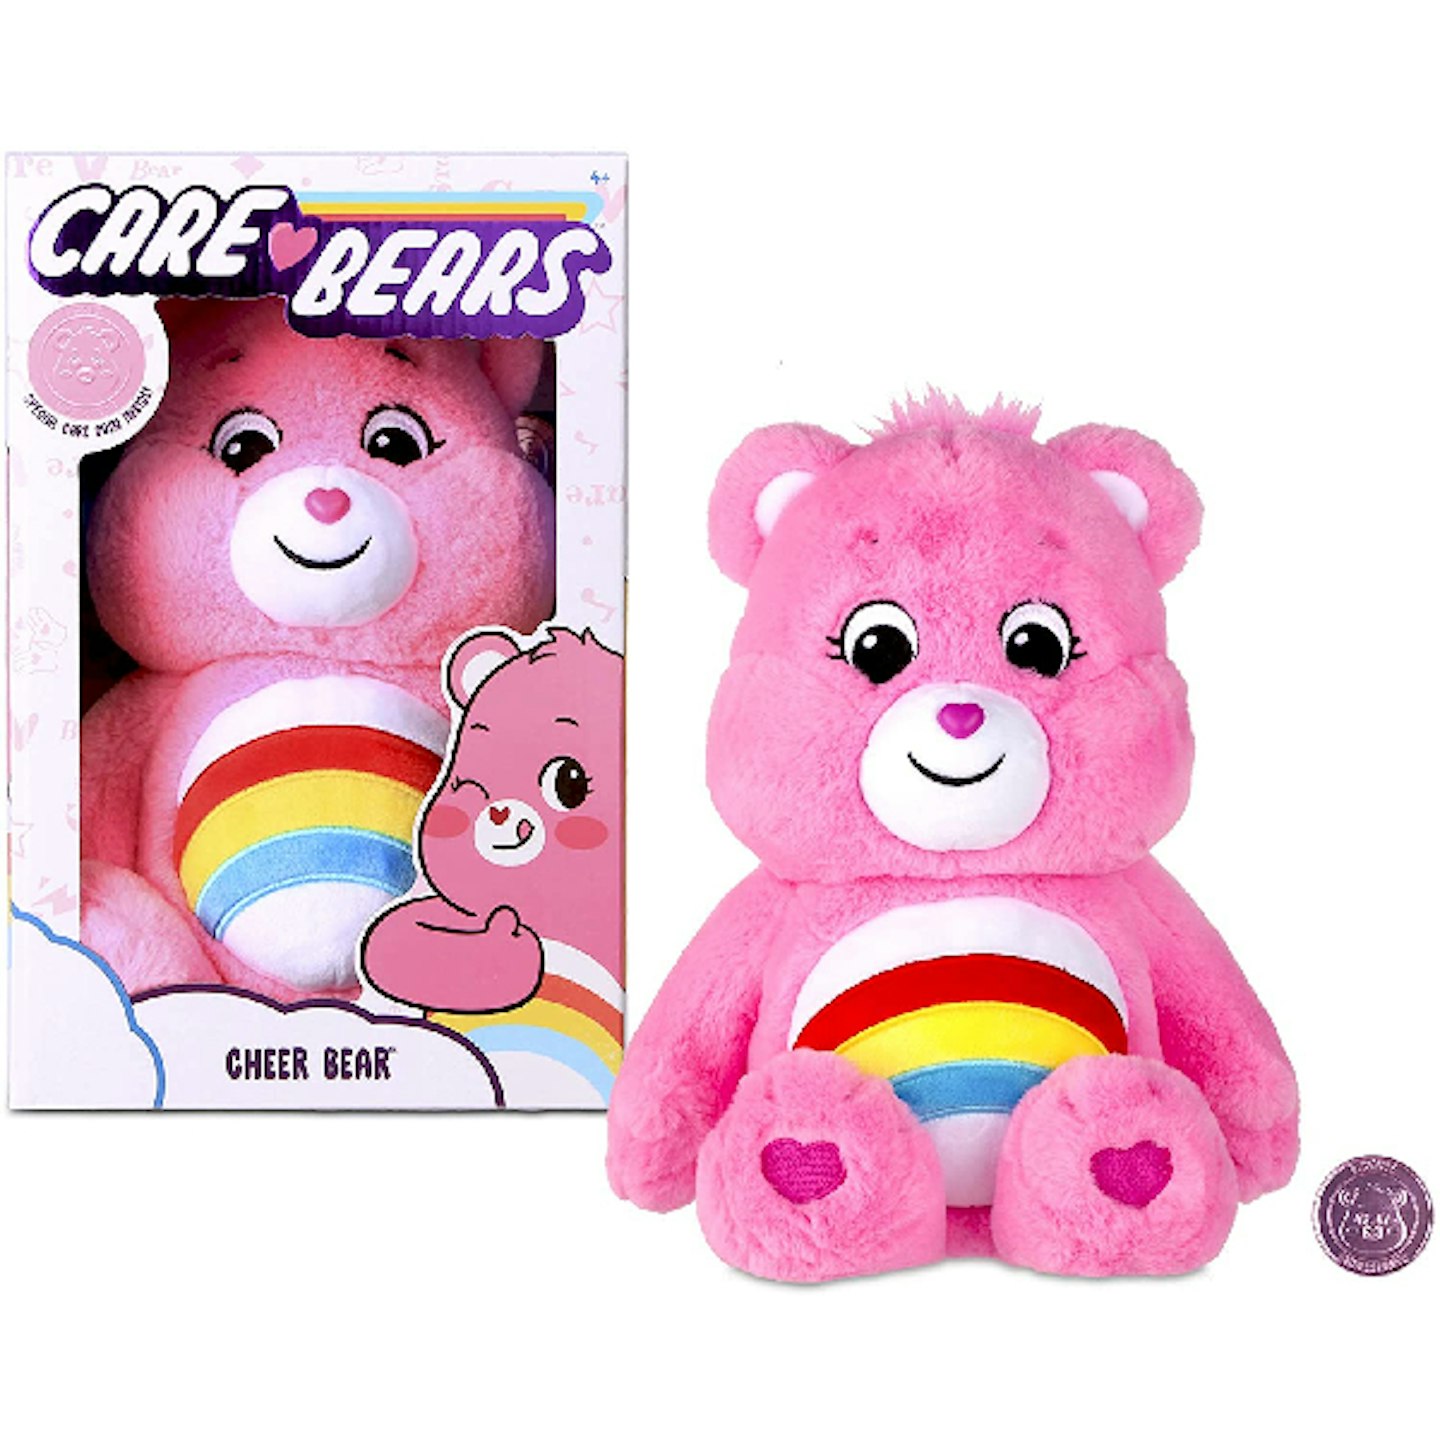 Care Bear collectible vintage toys